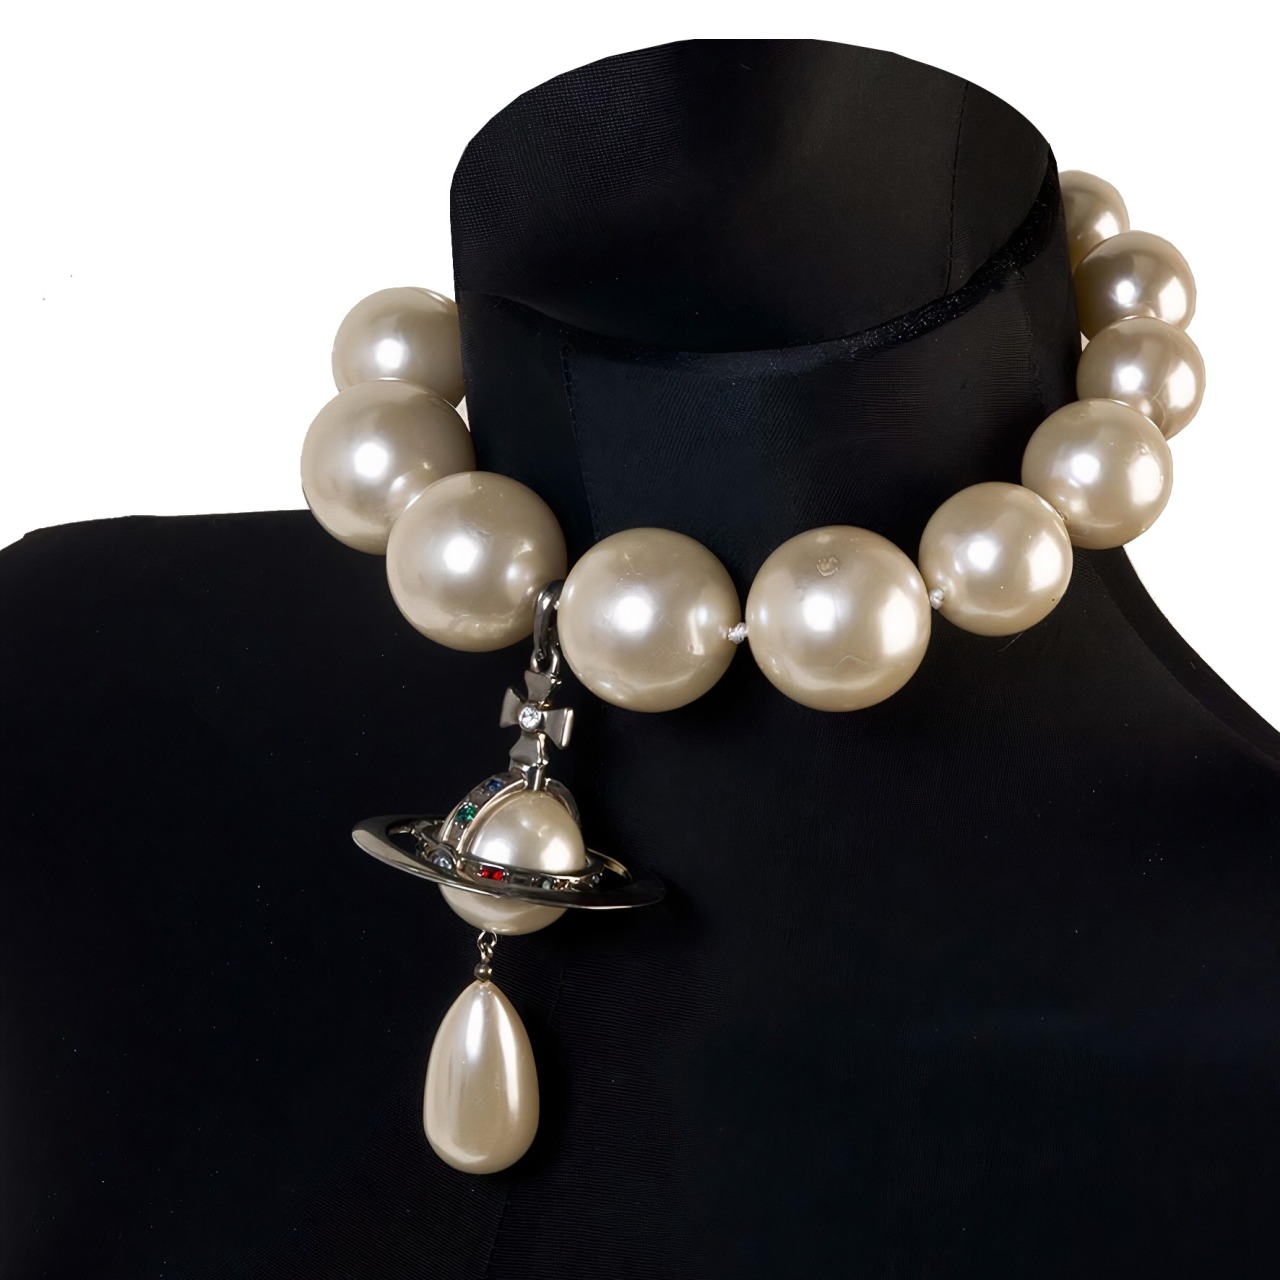 VIVIENNE WESTWOOD BROKEN Pearl Earrings PINK PEARL limited edition $299.00  - PicClick